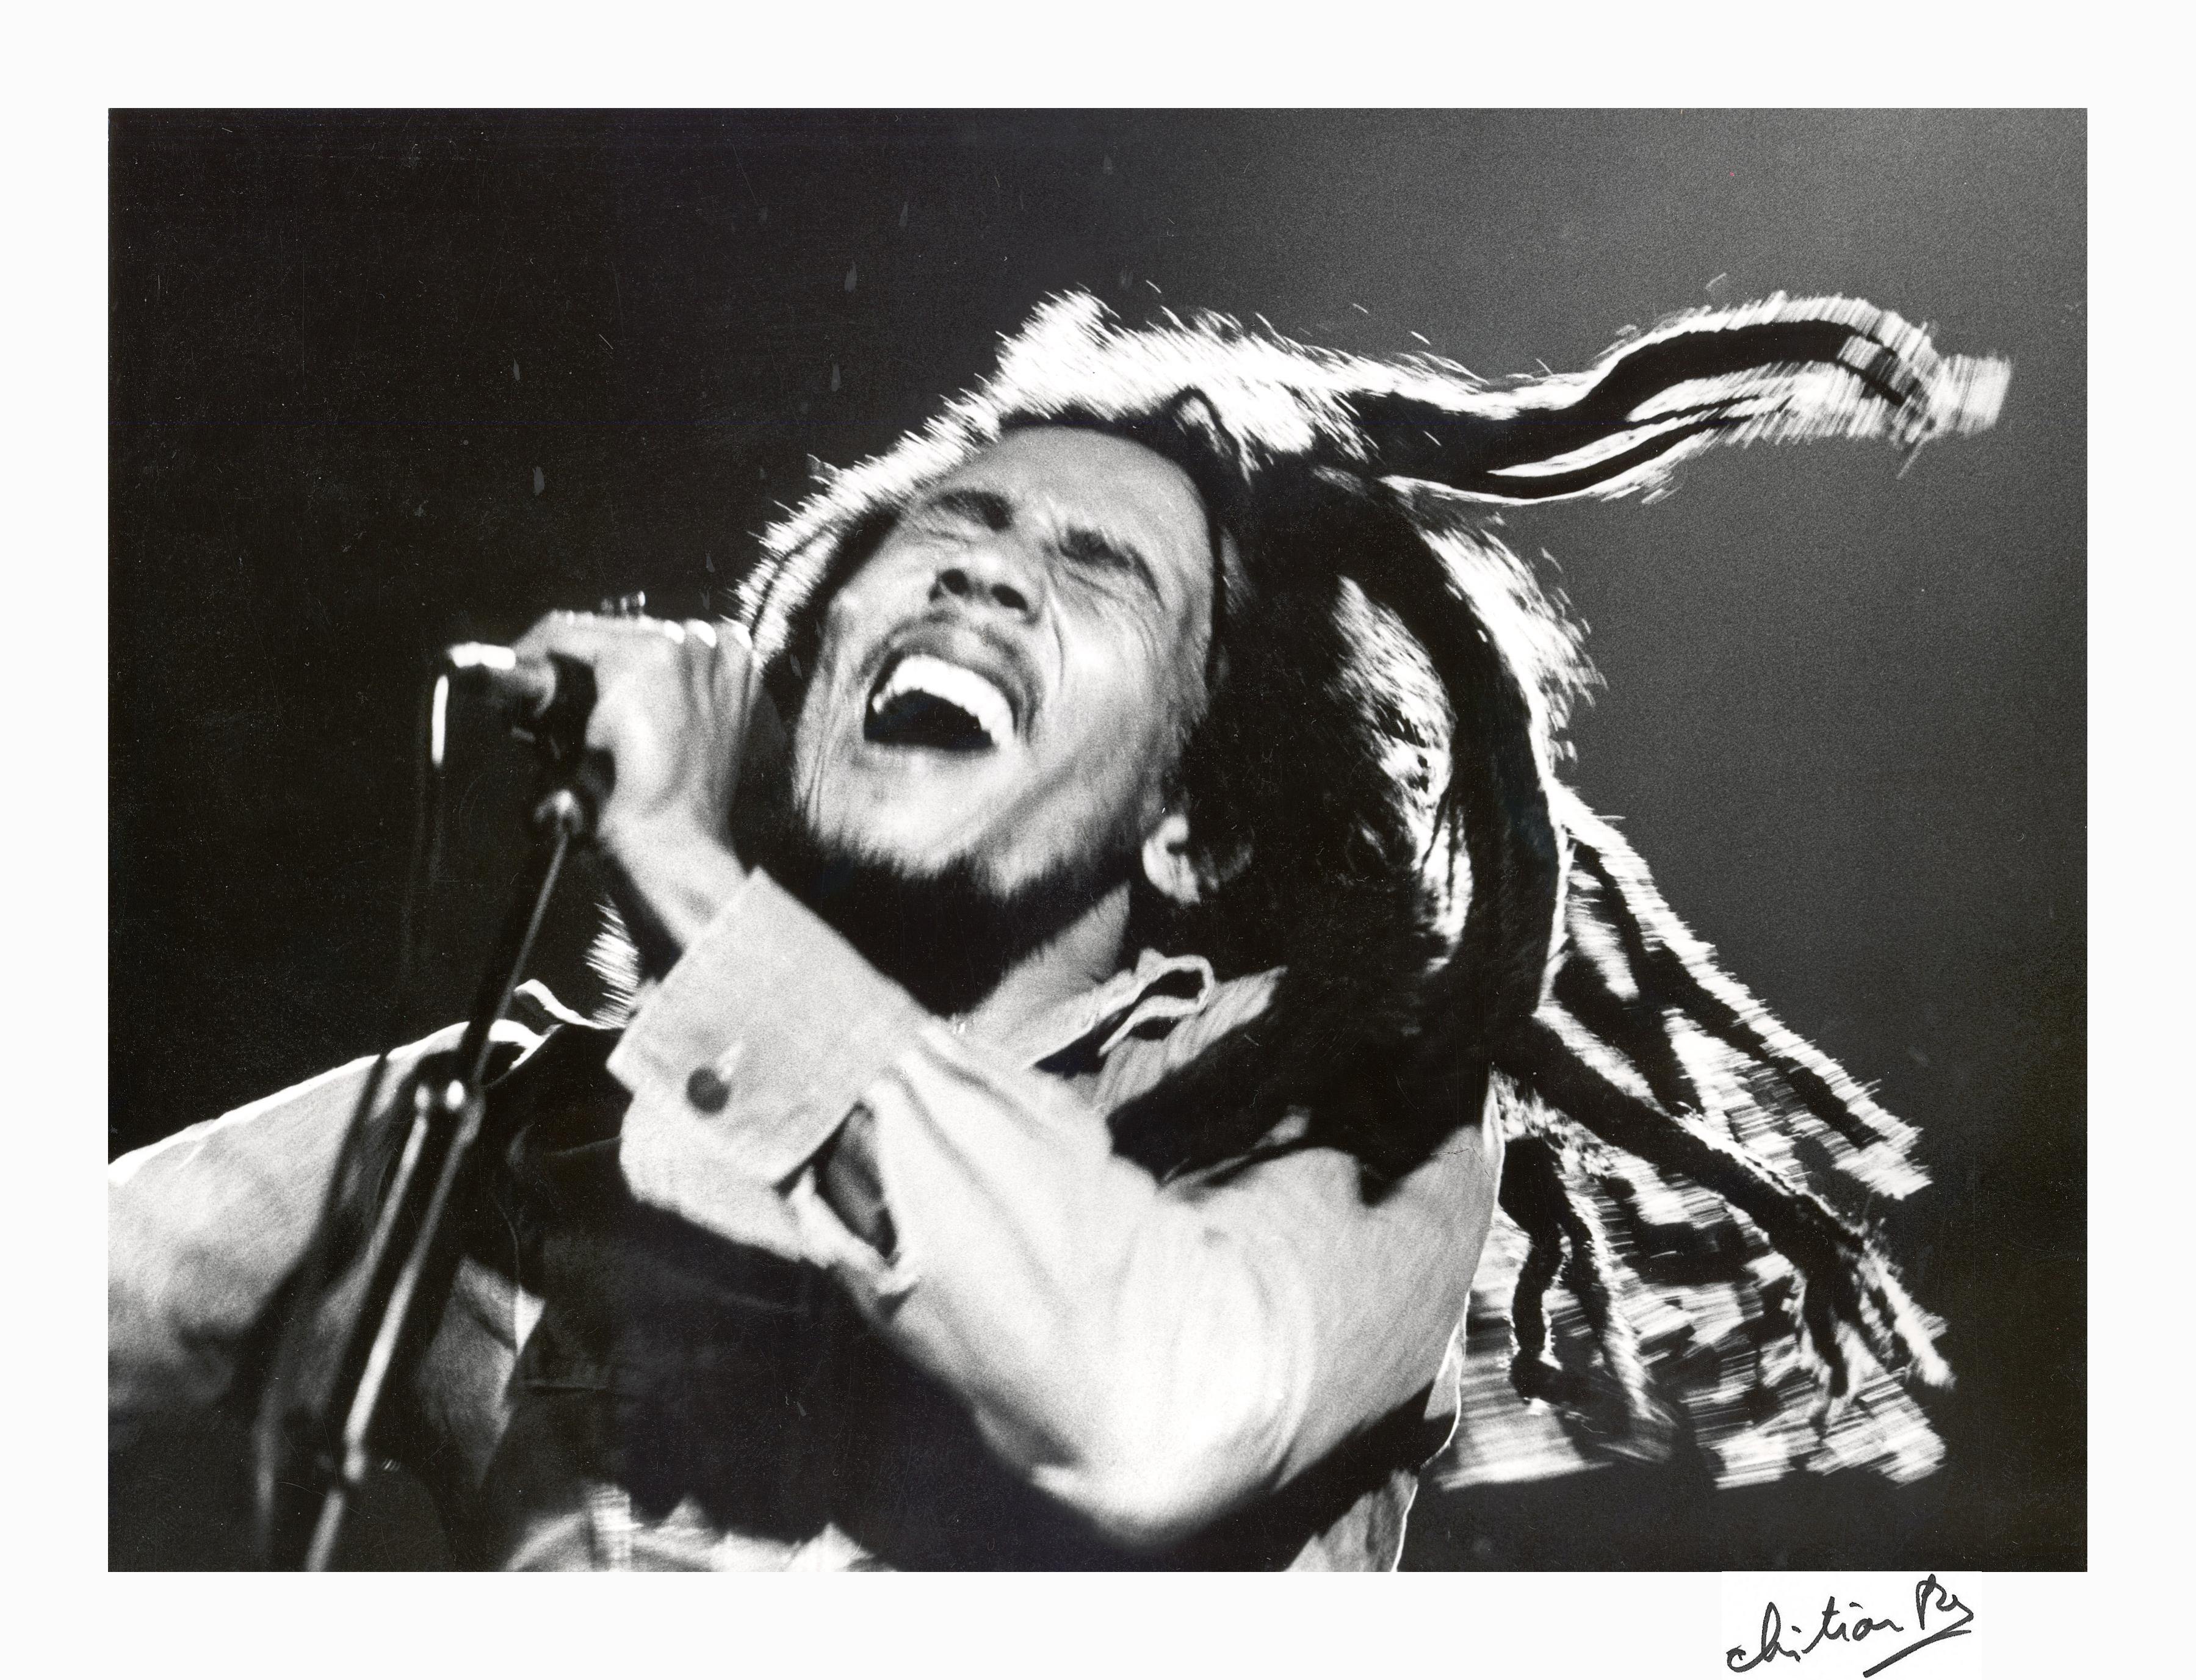 Christian Rose Portrait Photograph - Bob Marley Pantin 27 Juin 1978 Photography black and white reggae Jamaica